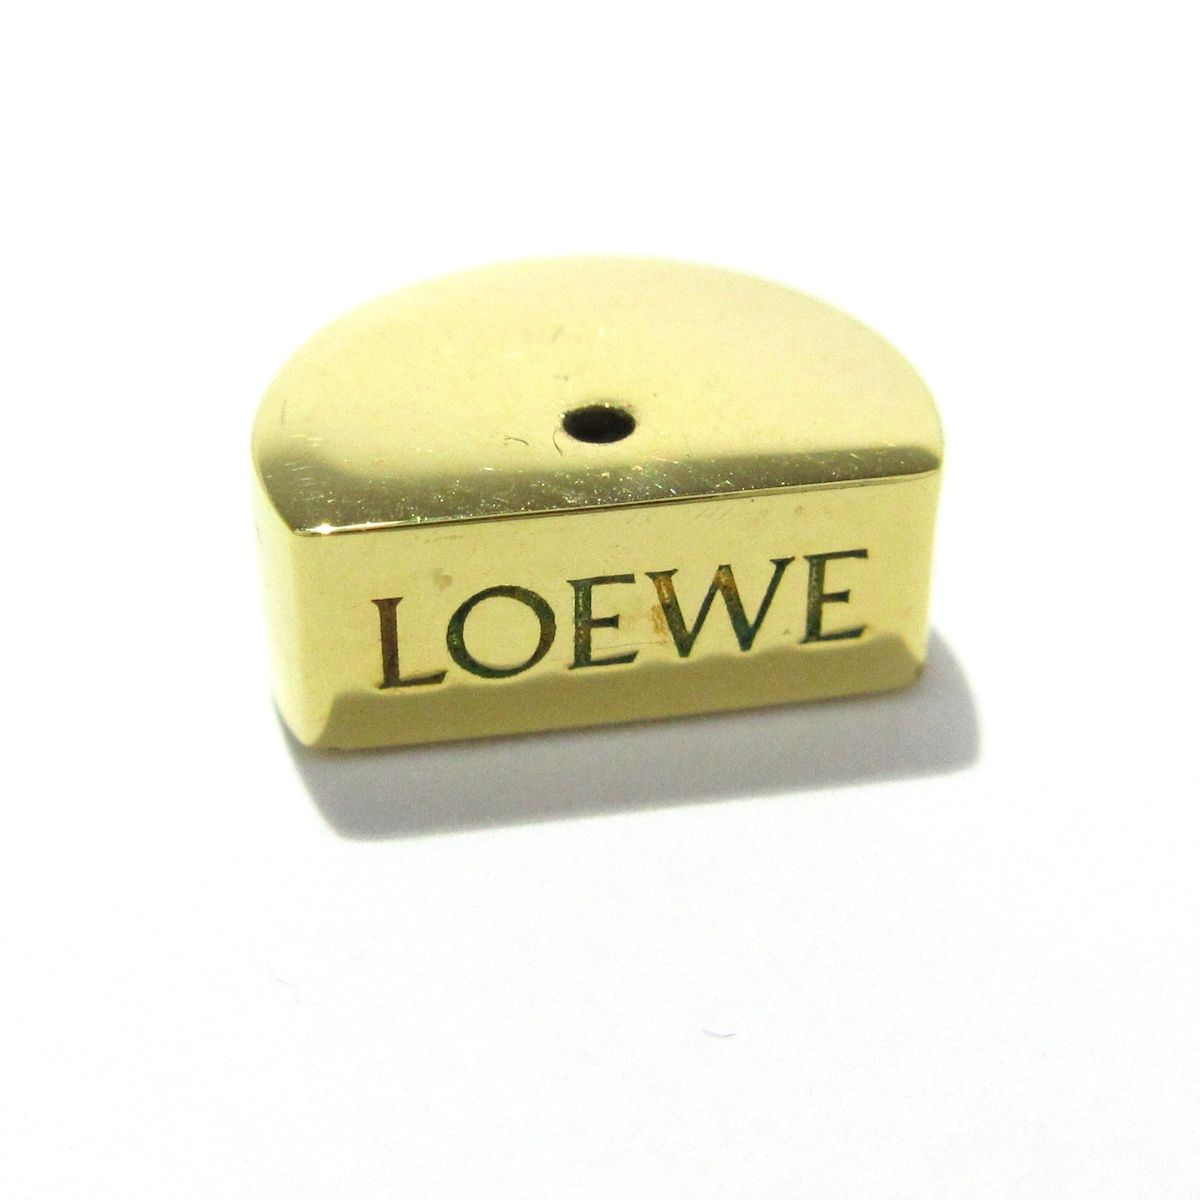 LOEWE(ロエベ) ピアス美品 - J647239X31 金属素材 ゴールド アナグラム ...